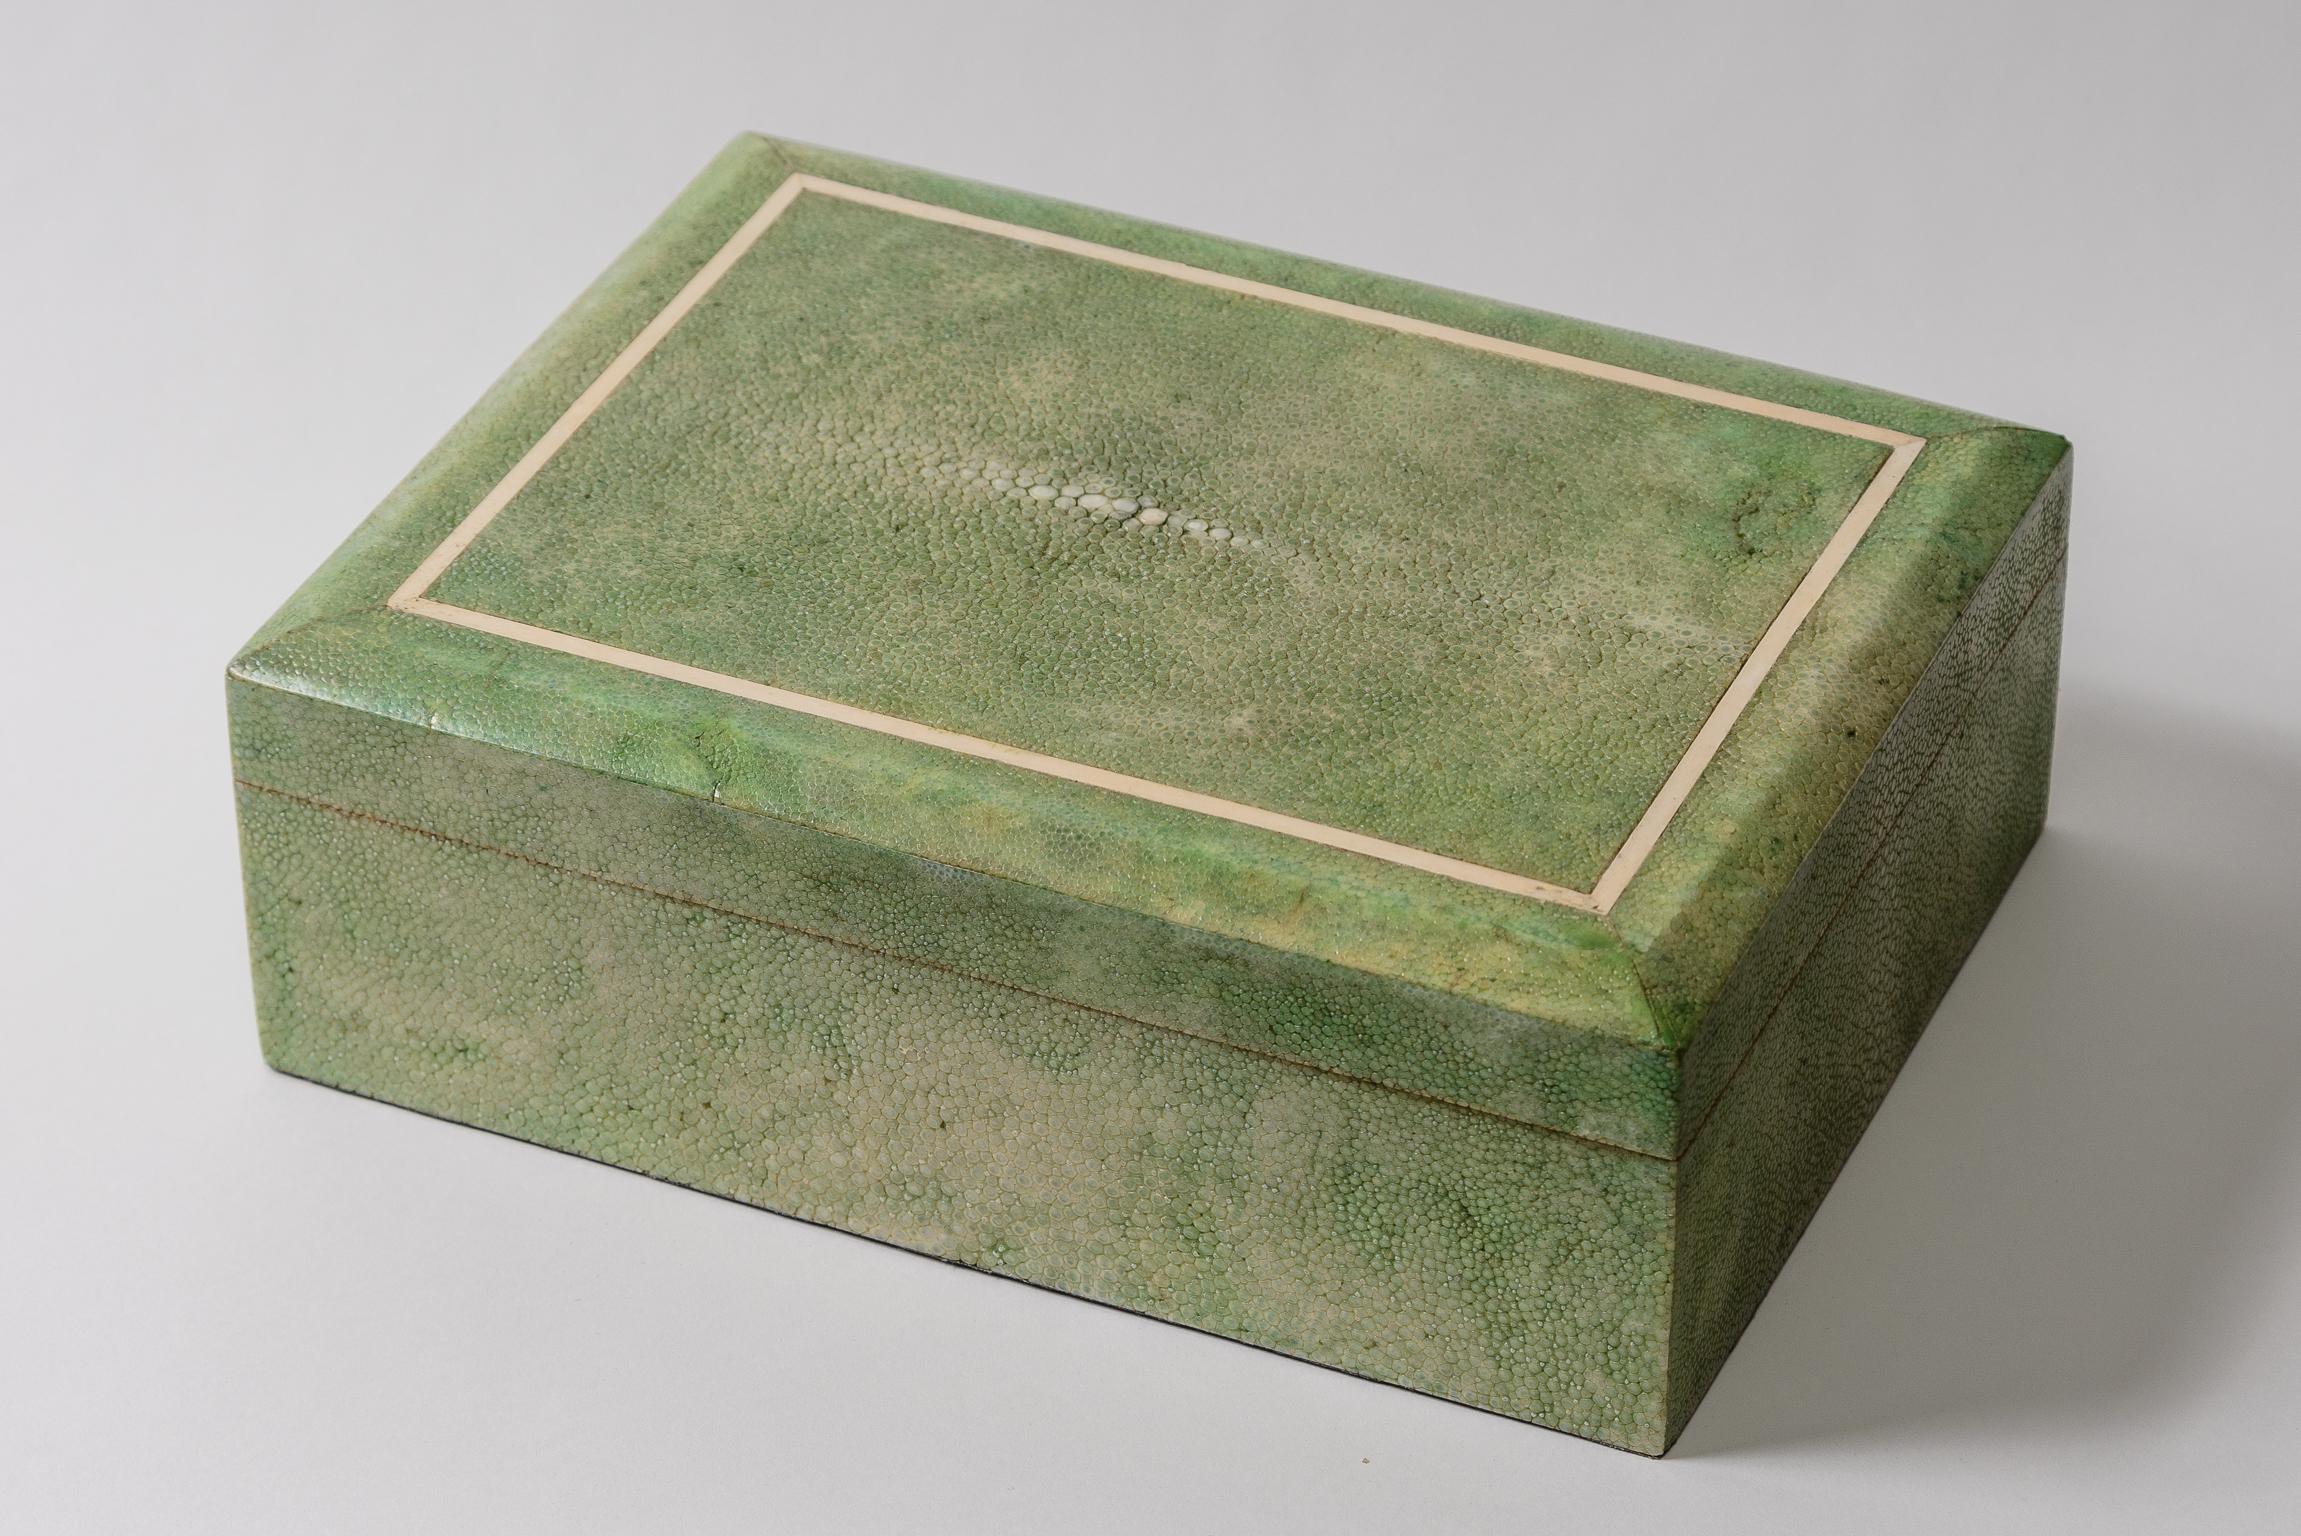 Grünes Zottelgrün Box
Mahagoni-Interieur
Kunstknochen-Inlay